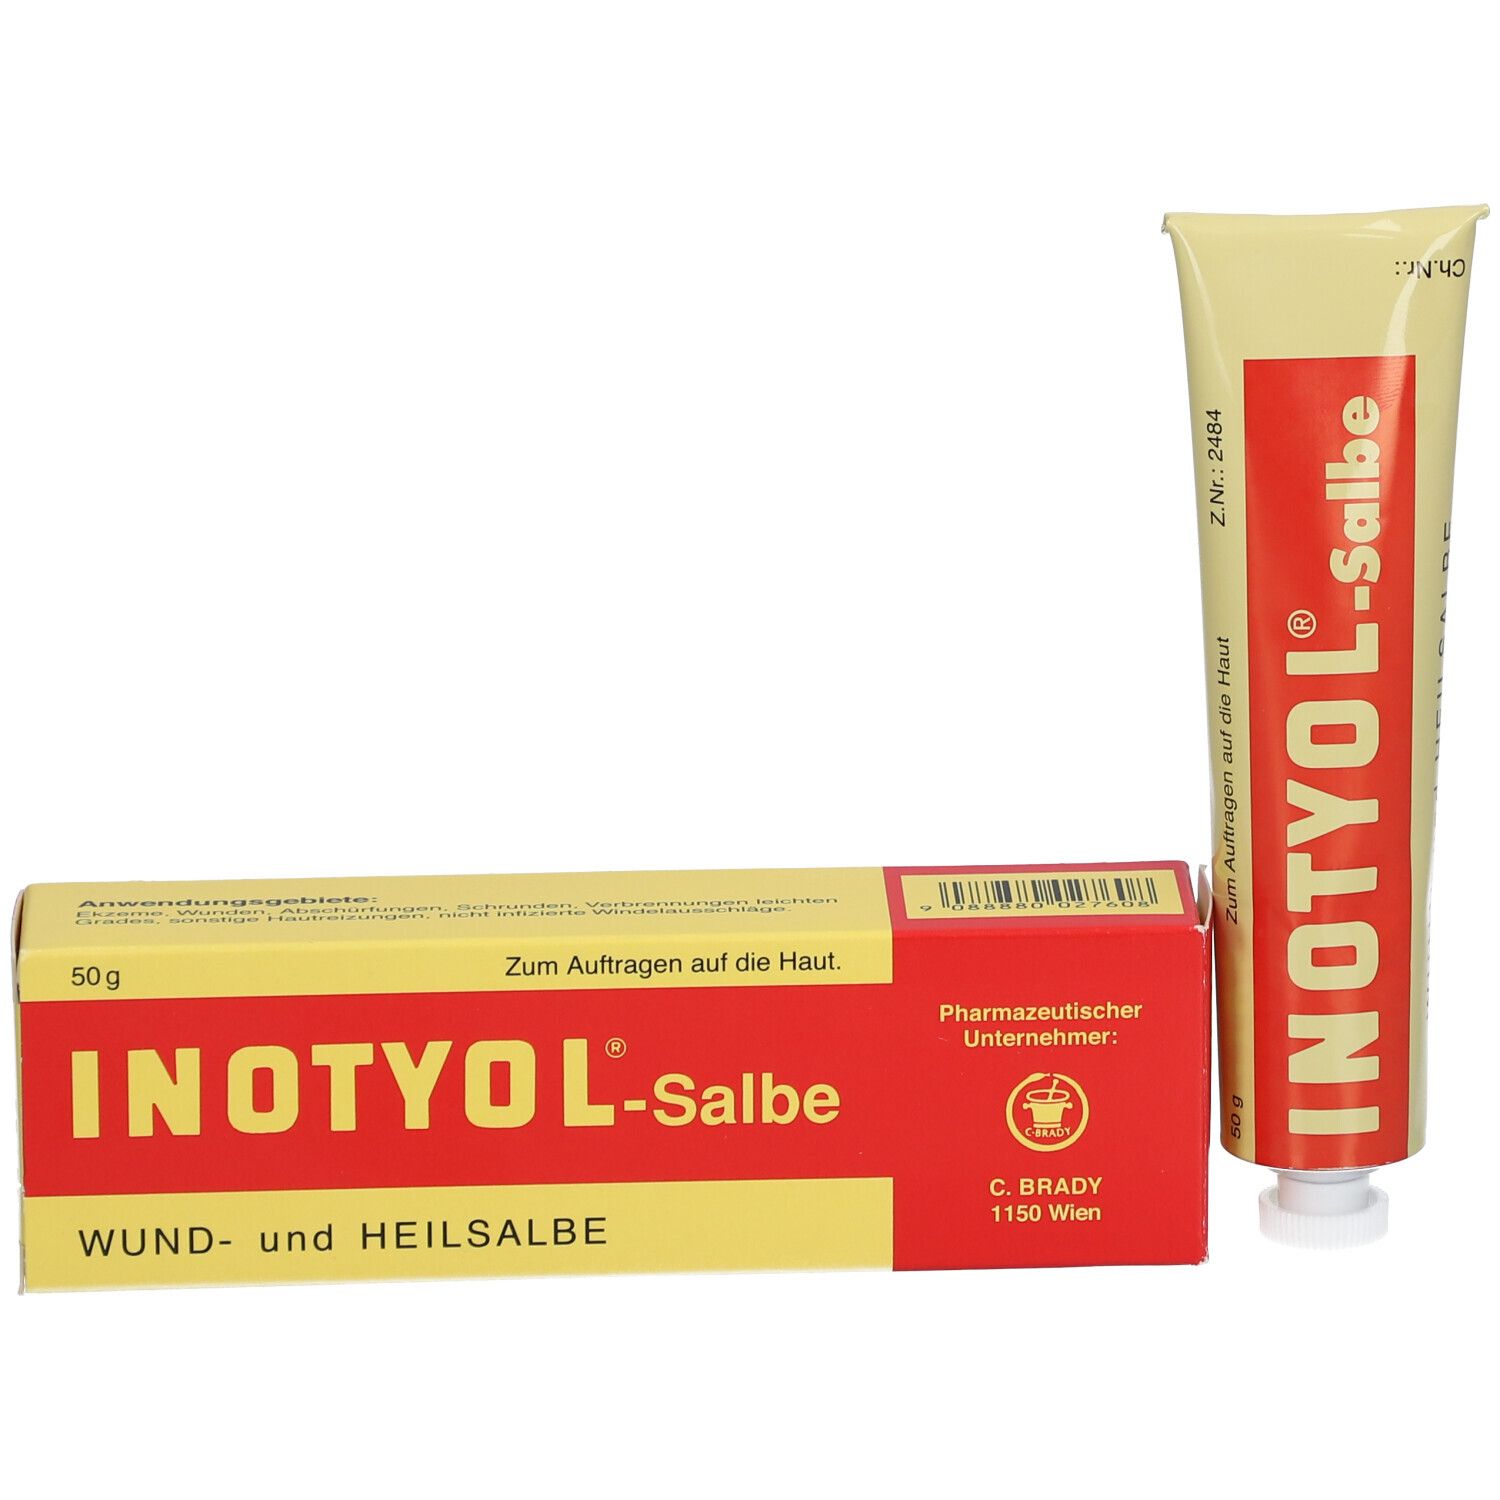 Inotyol®-Salbe